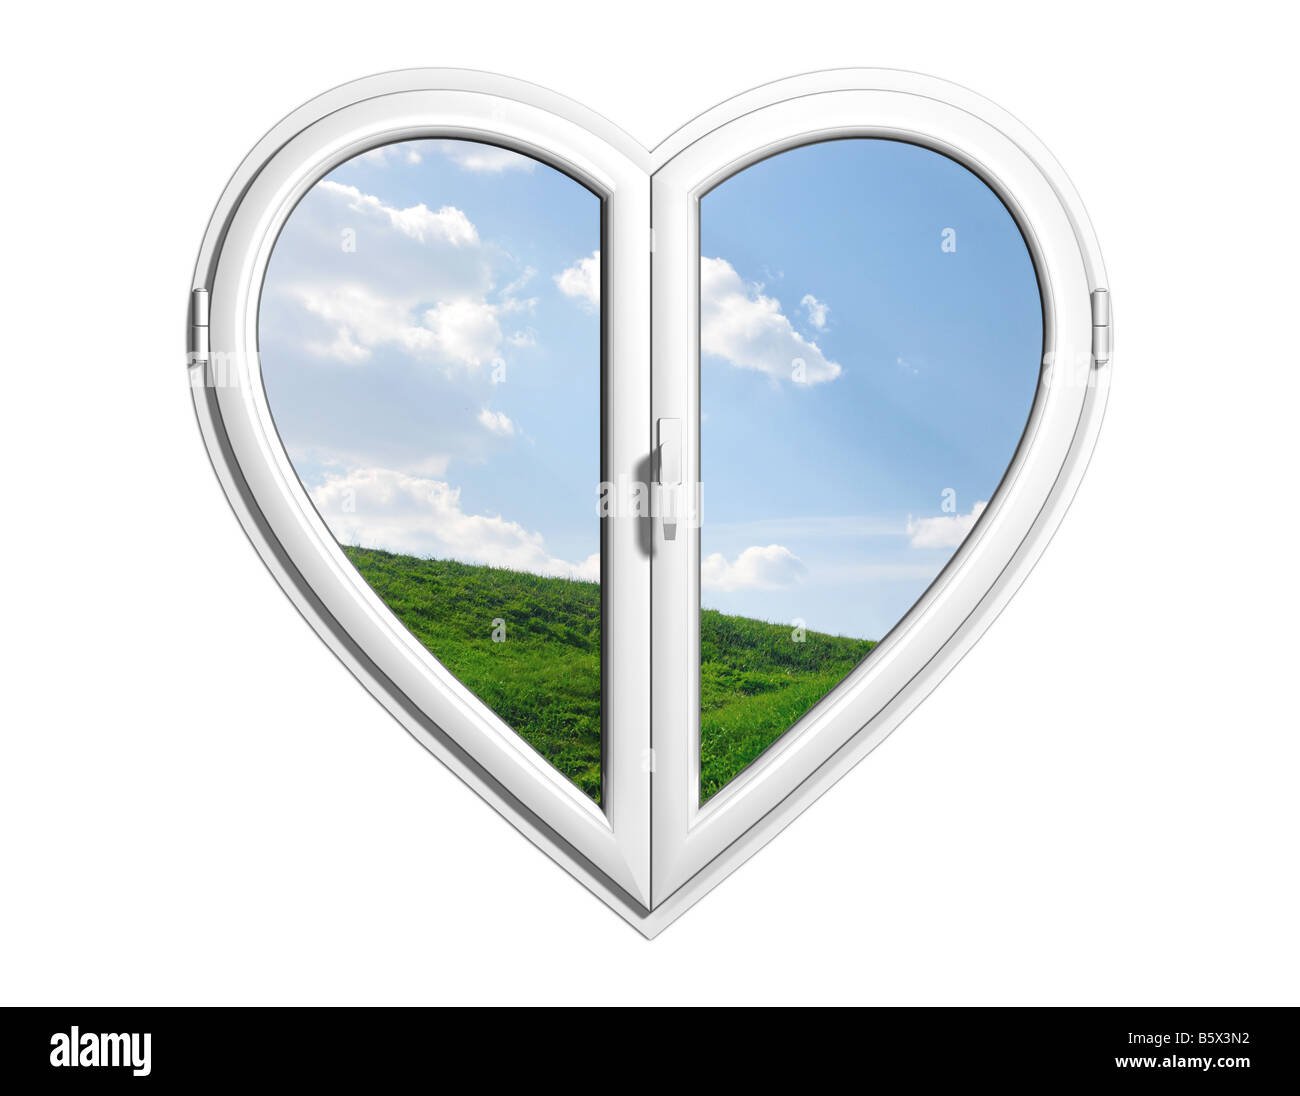 1 3 окно в сердце. Окна в виде сердца. Окна в виде сердечка. Сердечко на окне. Дом с окнами в виде сердца.